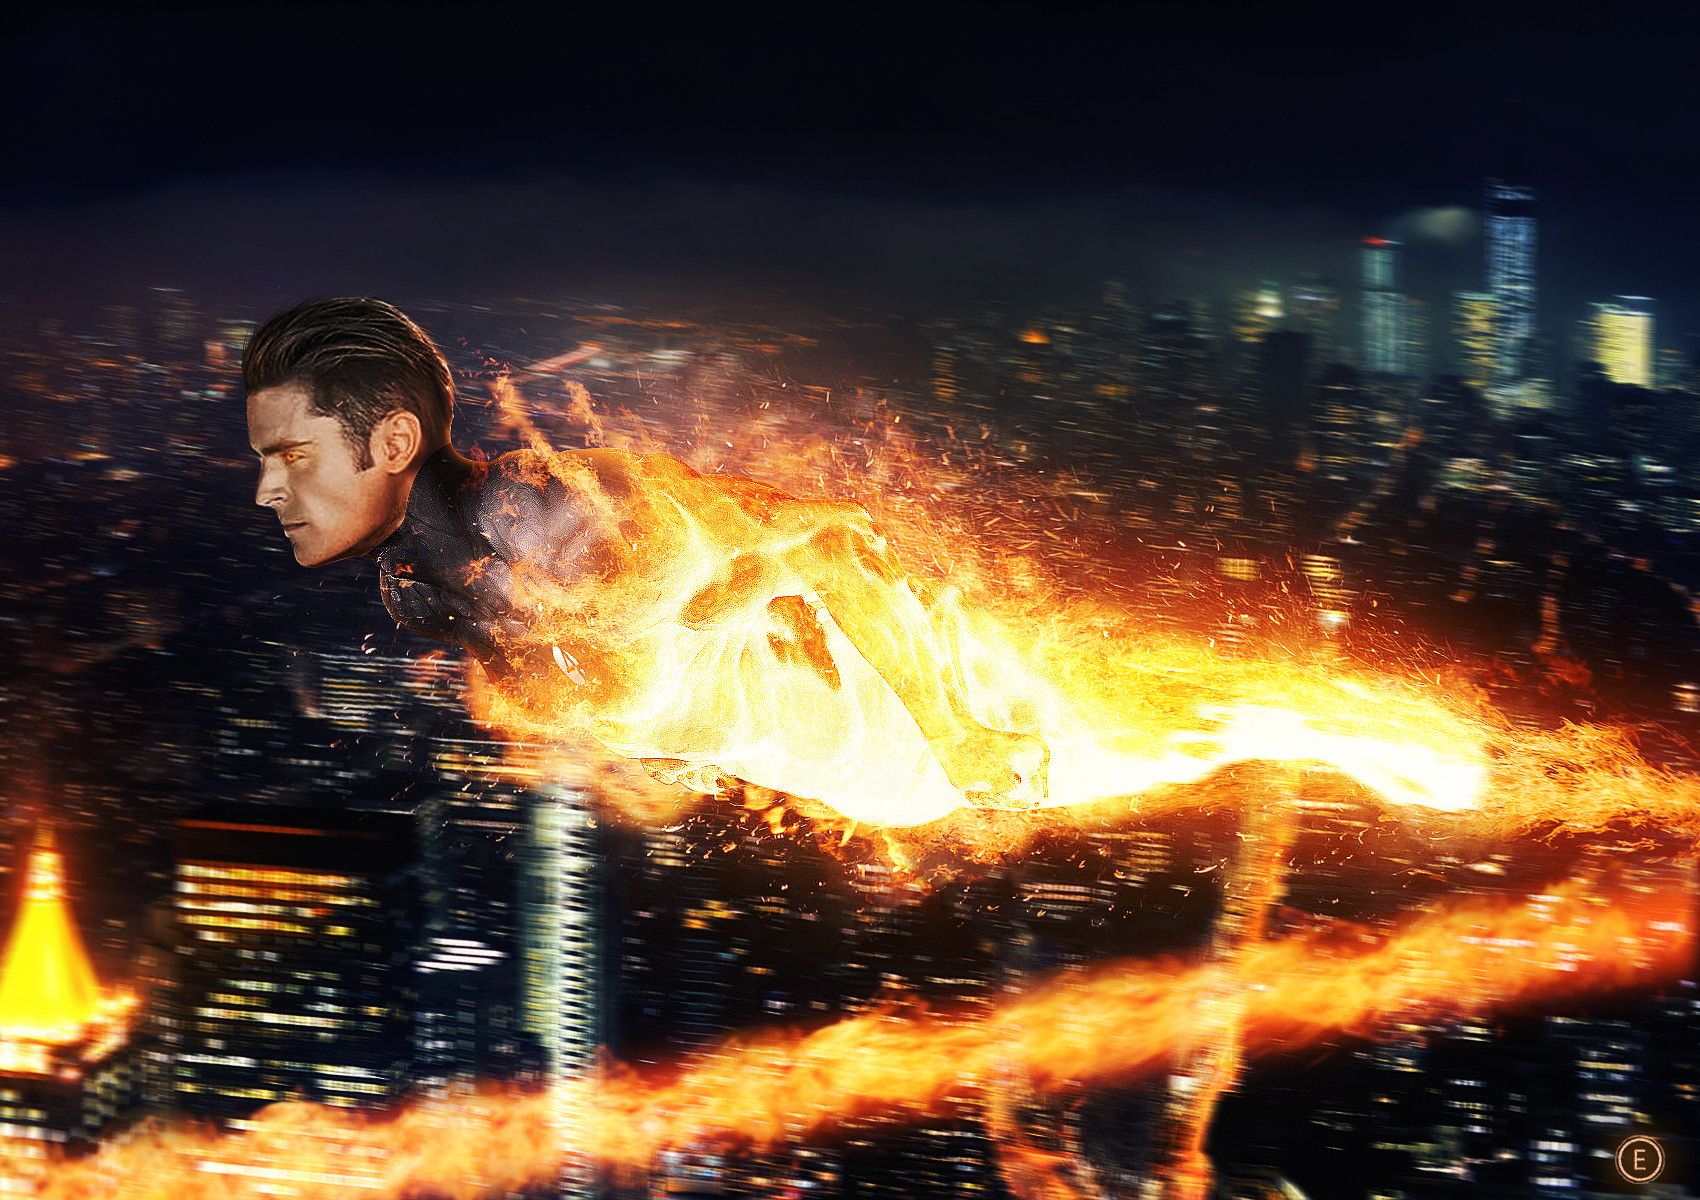 Zac Efron as Human Torch